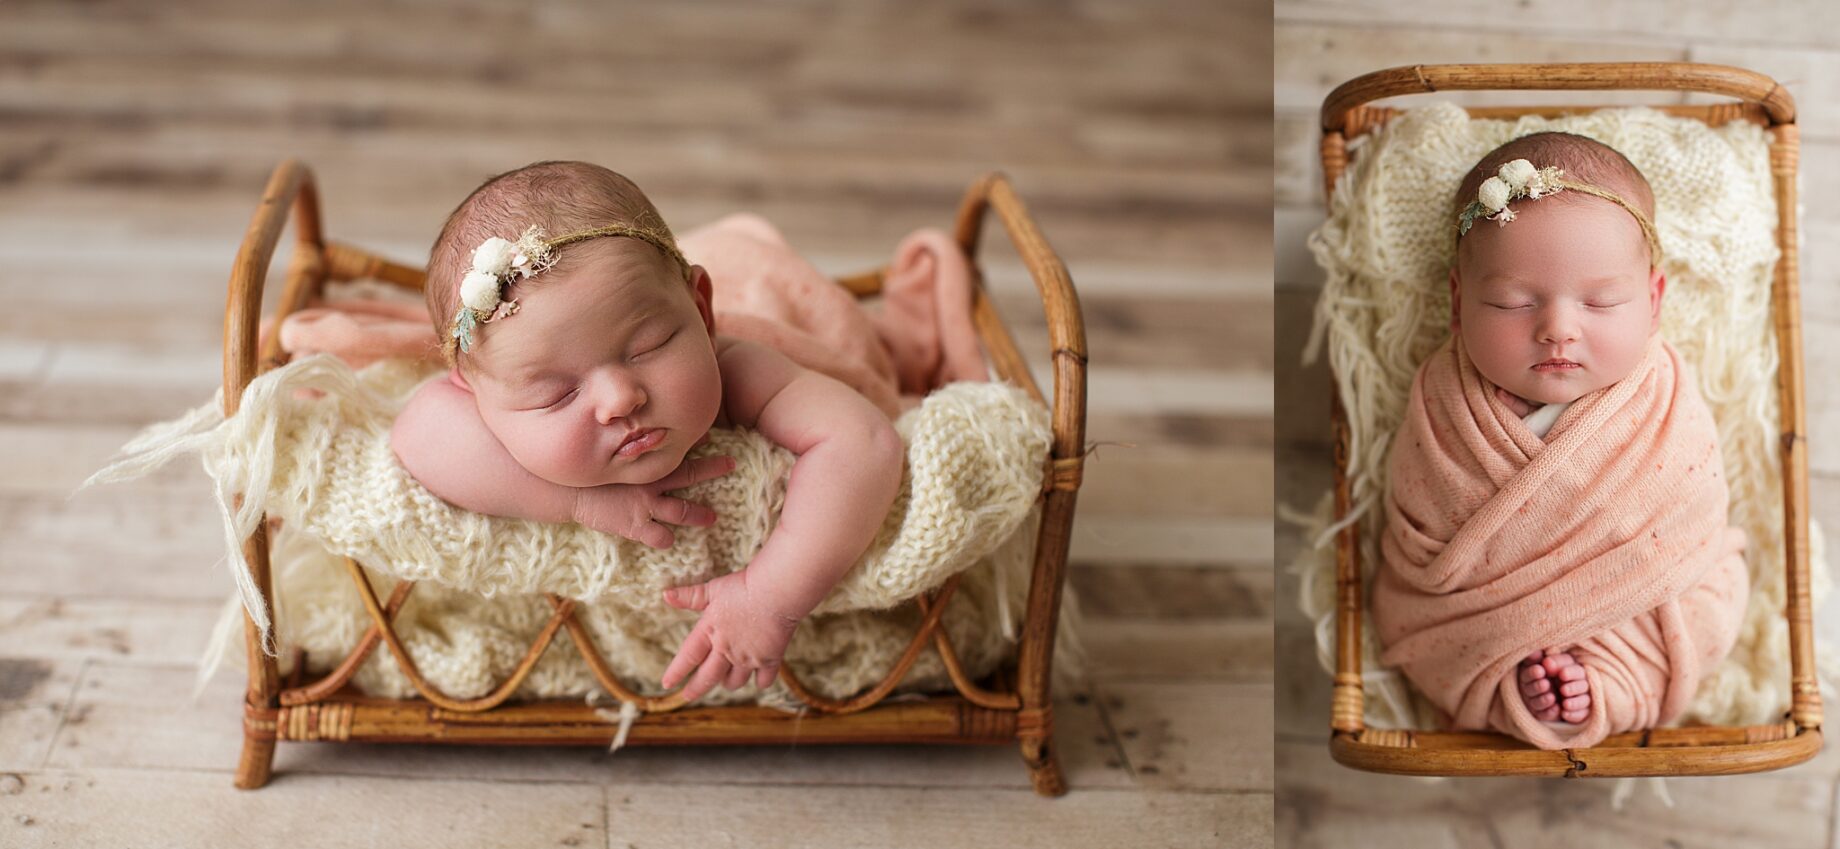 southeast Missouri newborn photographer, Perryville newborn photographer, Cape Girardeau newborn photographer, baby in basket, wood floor, newborn photoshoot, boho theme newborn